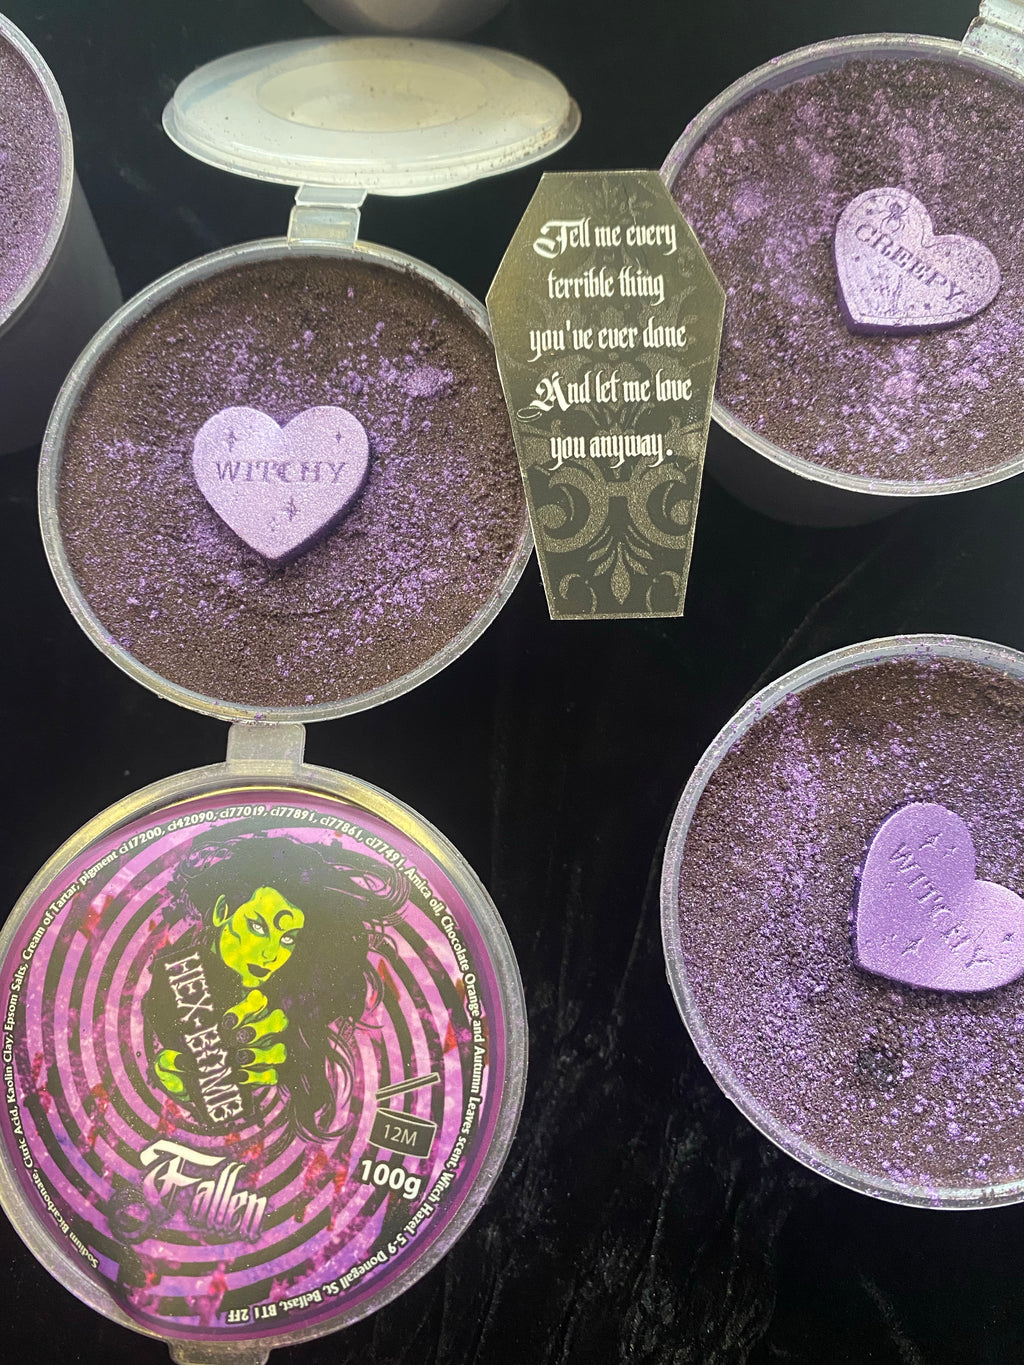 FALLEN- black purple metallic with mini soap and hexspirational quote